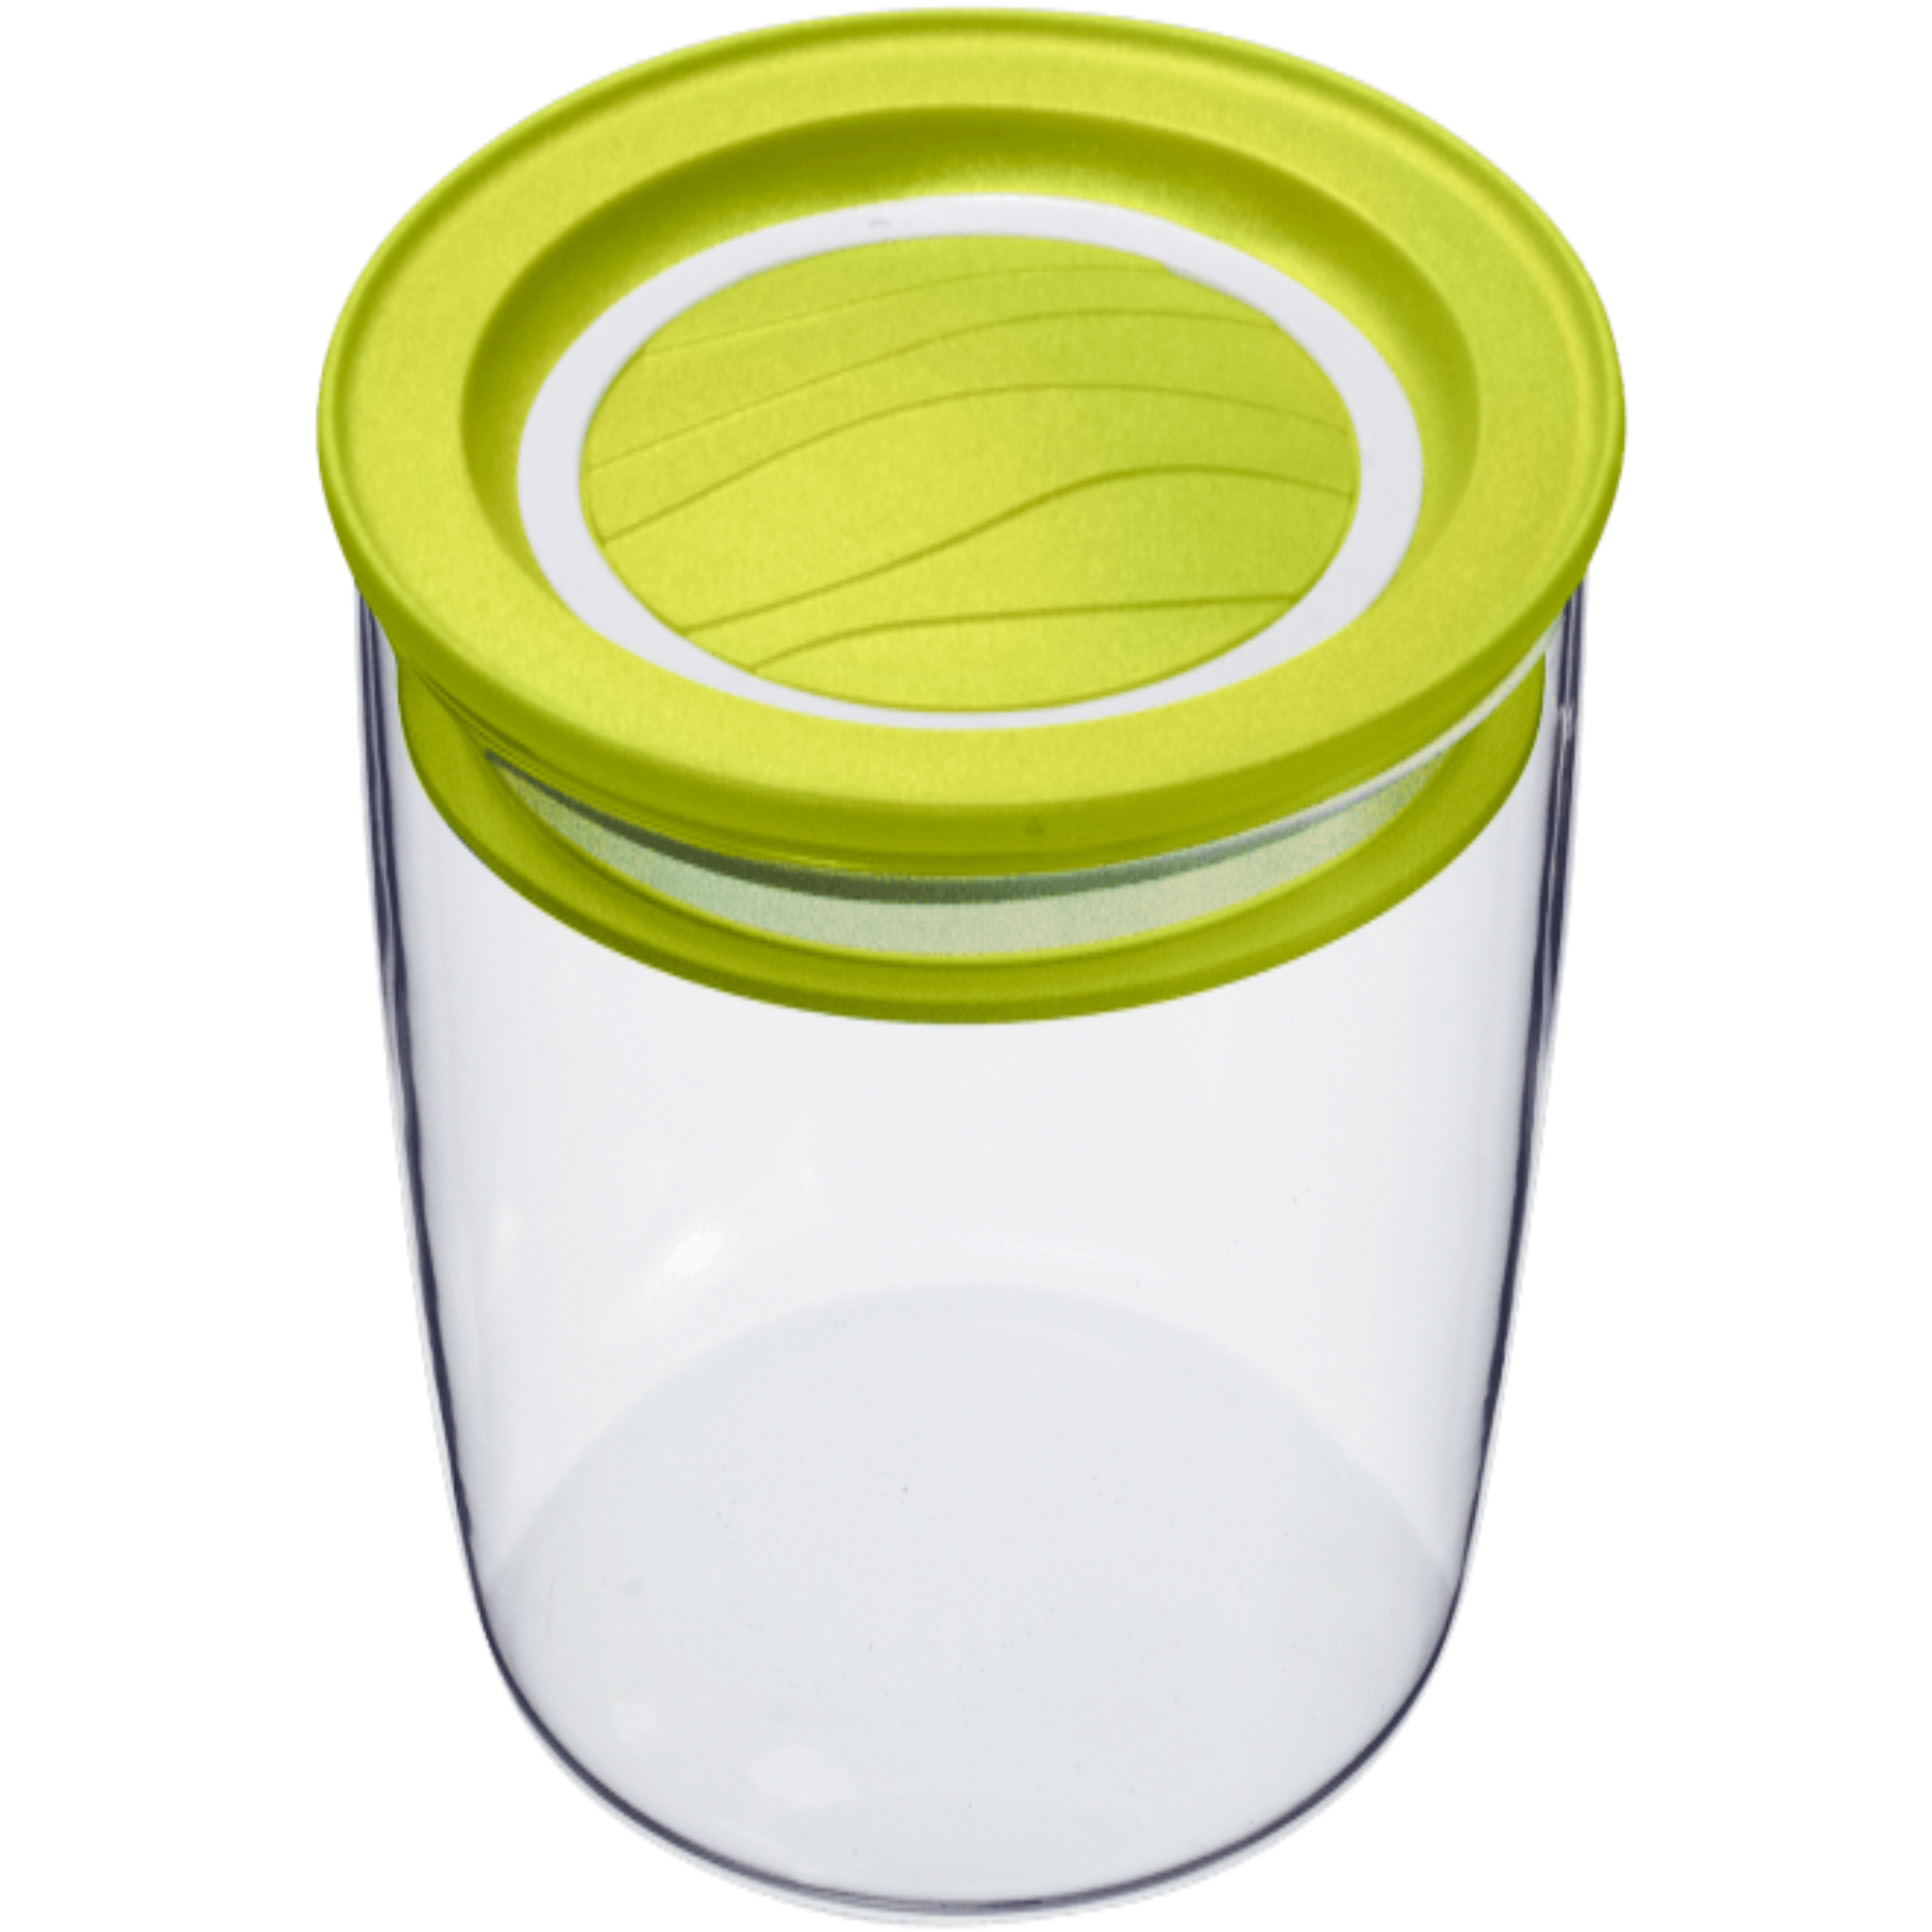 Rotho - Cristallo Round Food Keeper - Green - Plastic - 0.4 Lit - 52000271